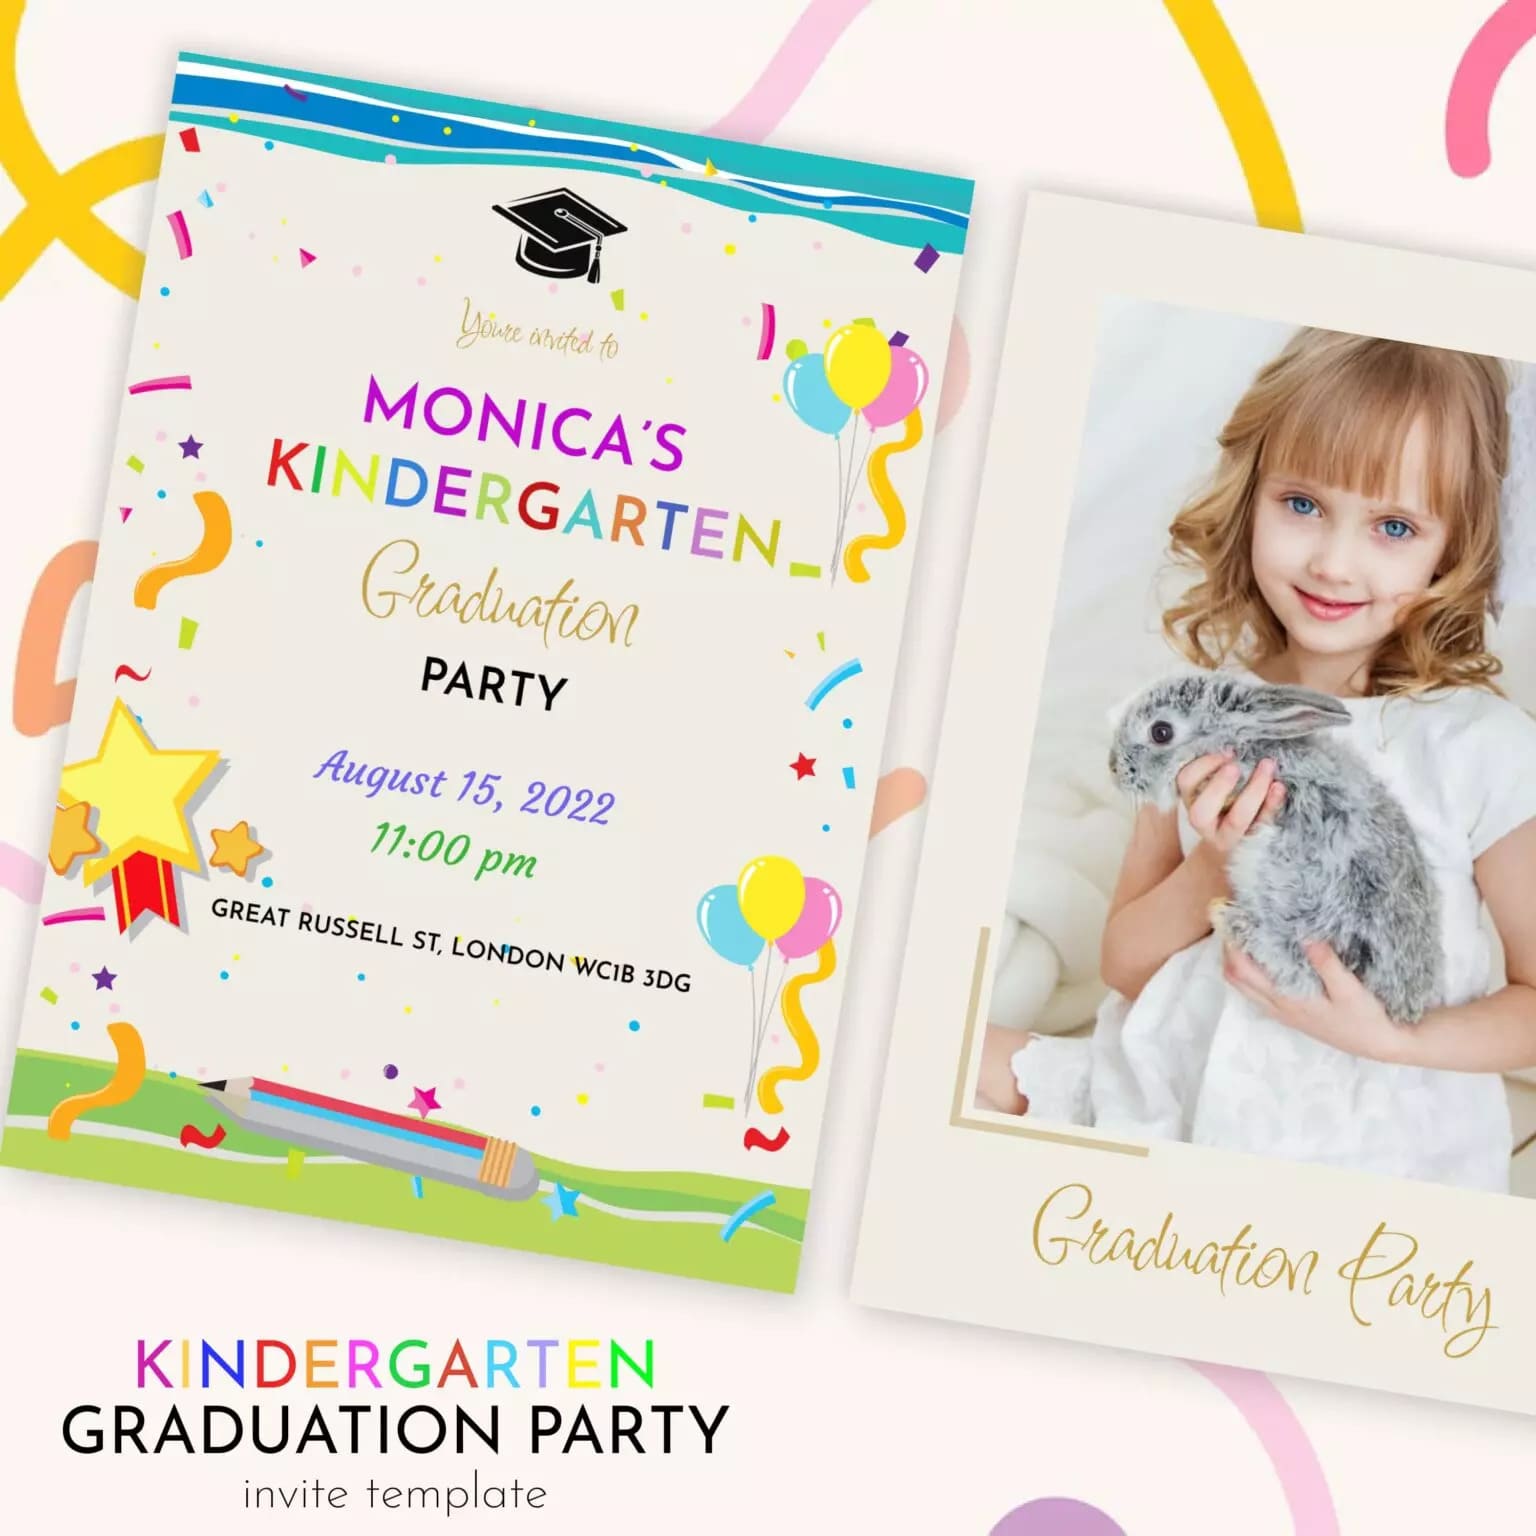 Kindergarten Graduation Party Invite Template Preview.